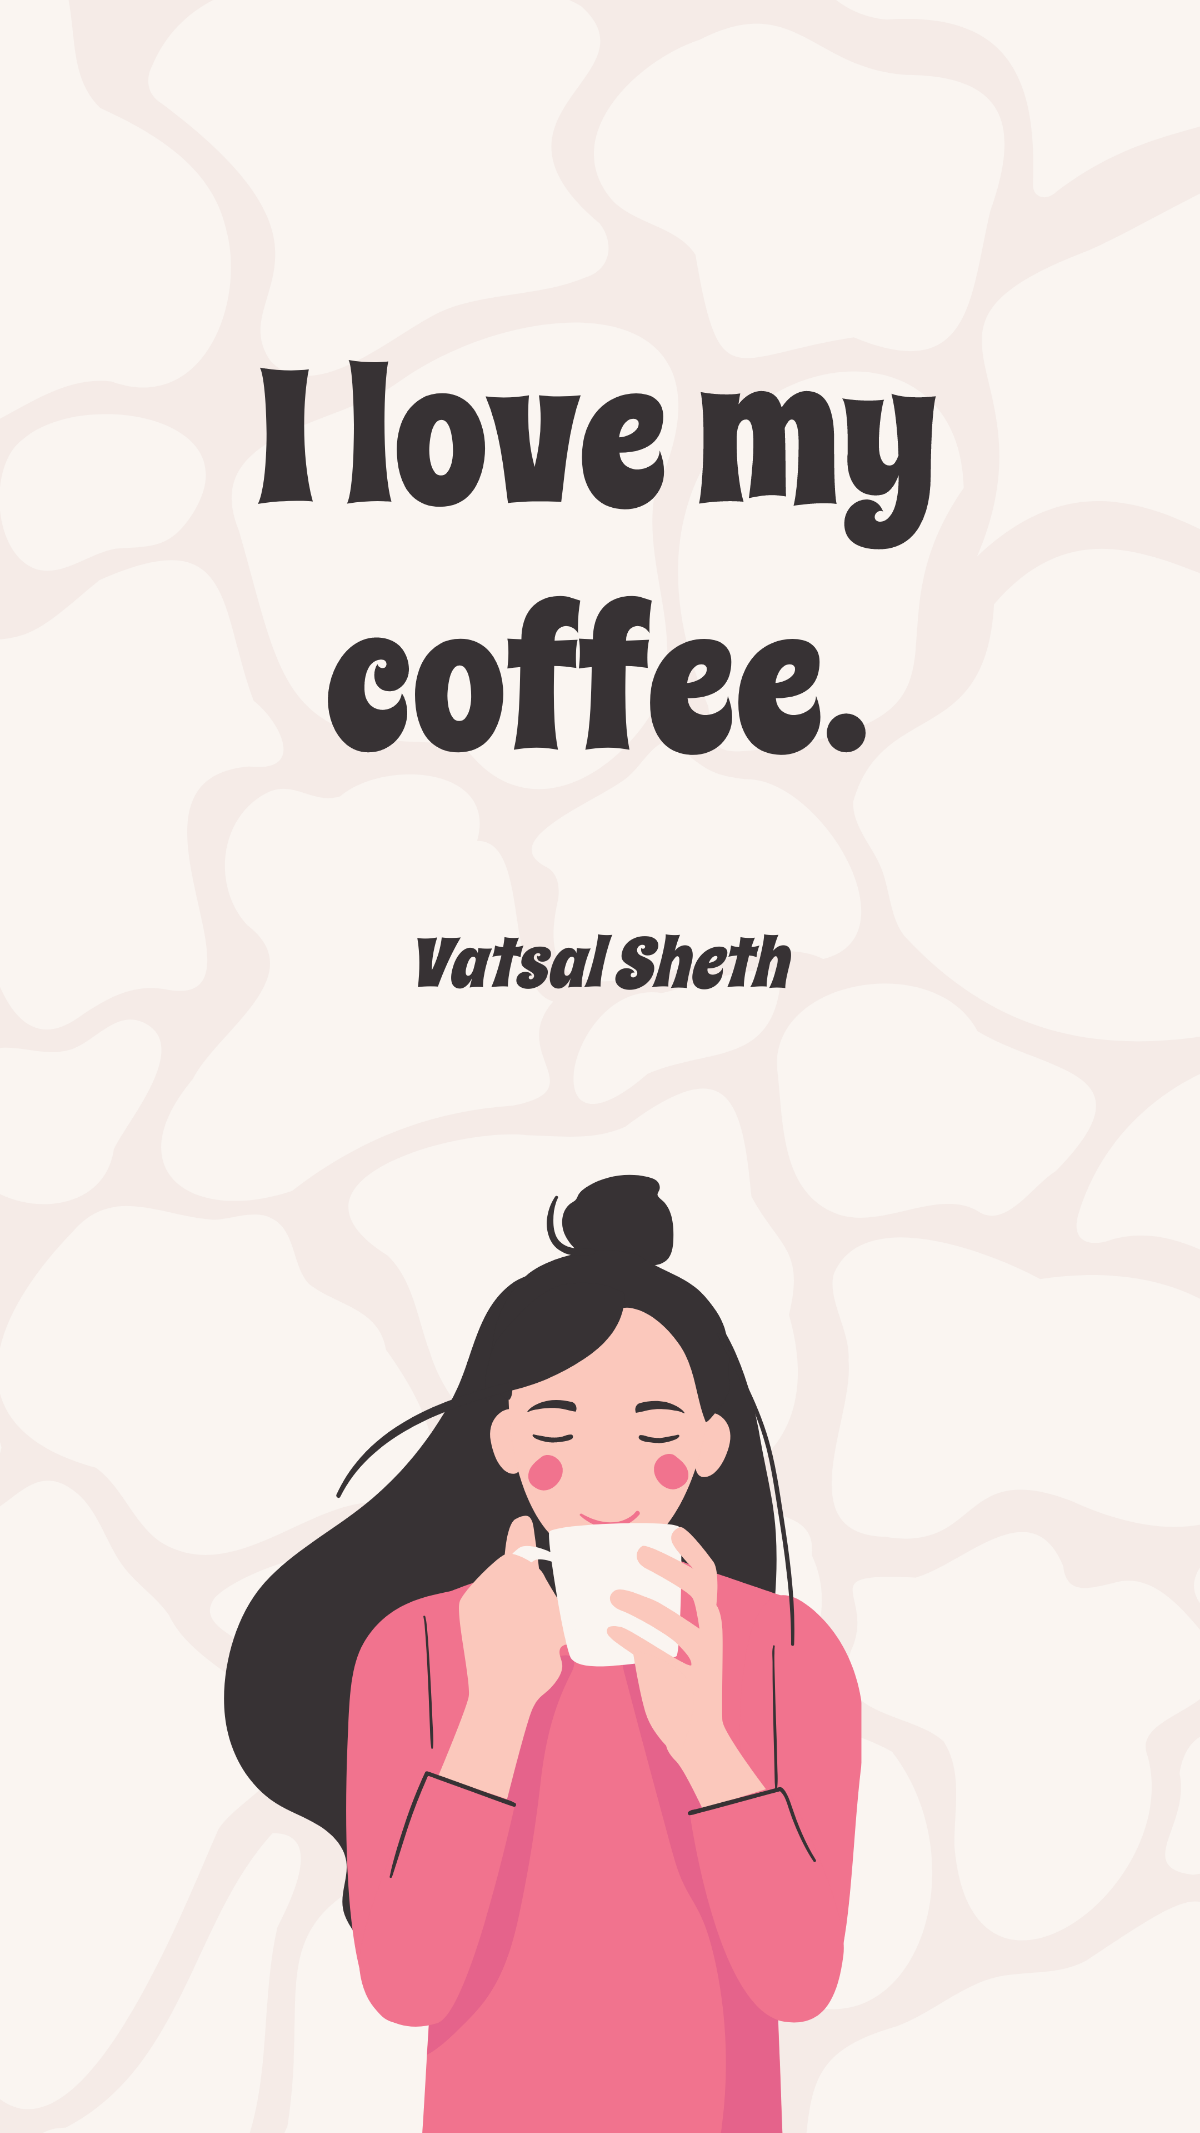 Free Vatsal Sheth - I love my coffee. Template